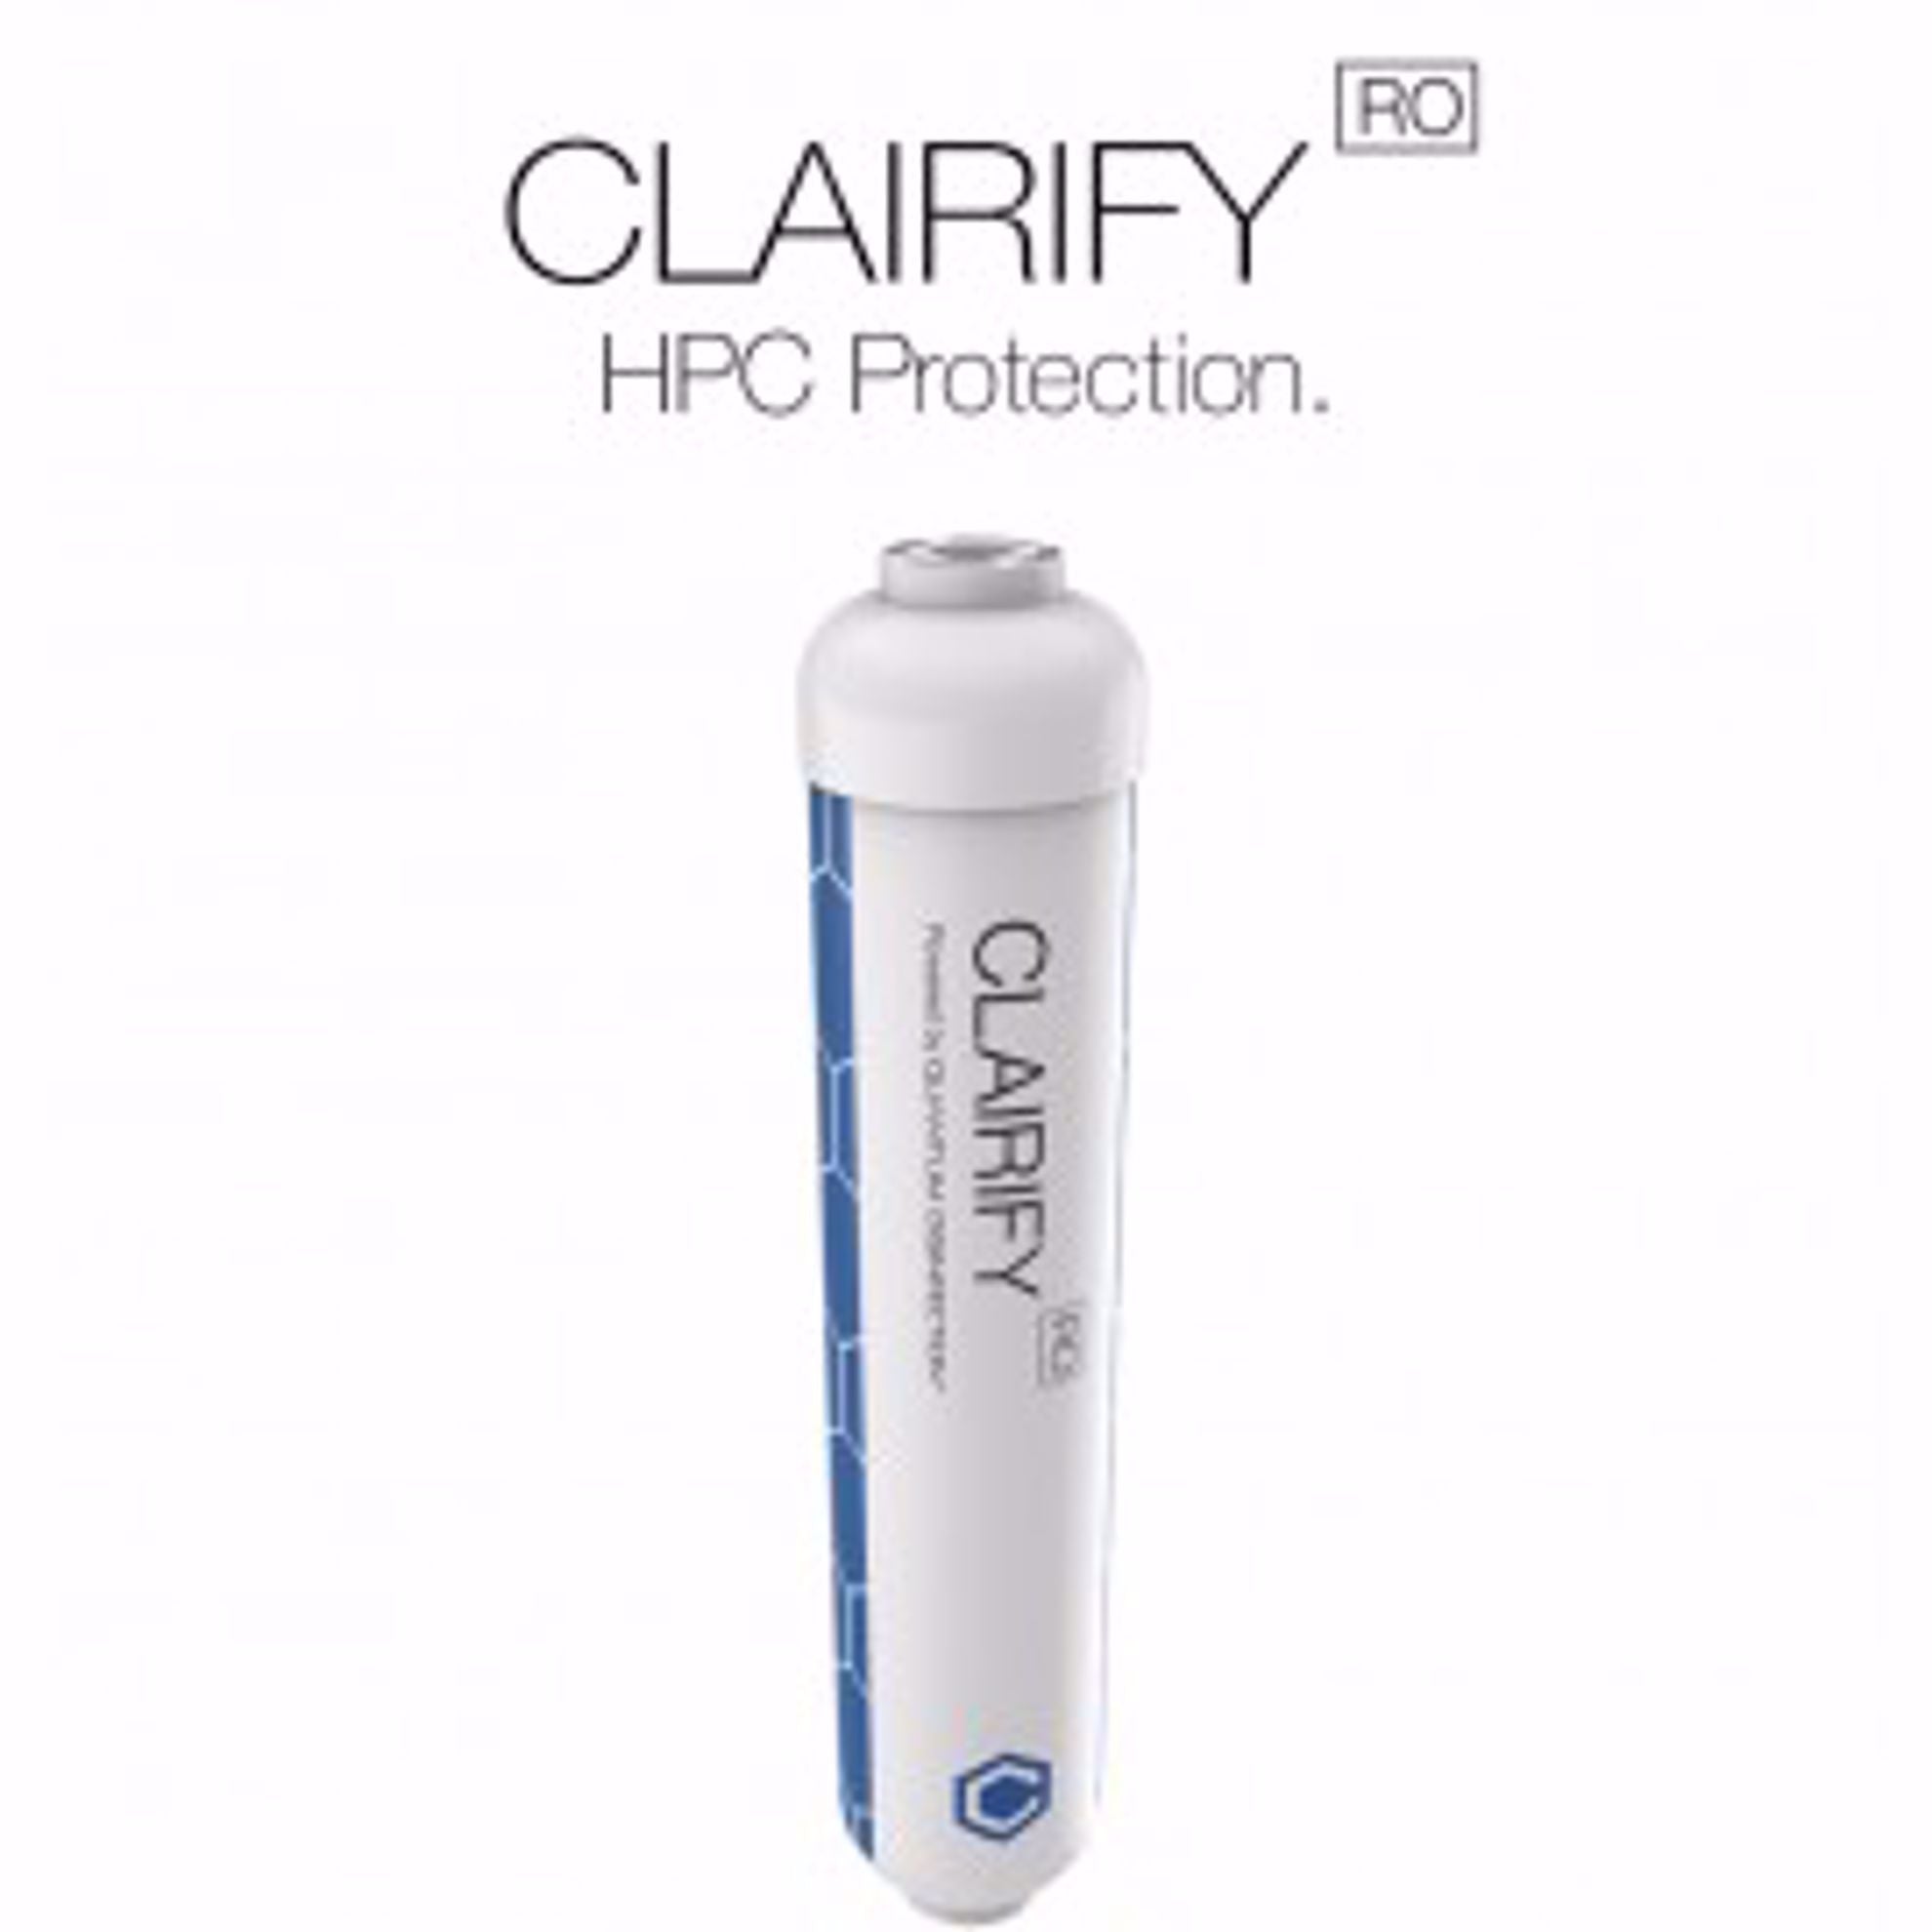 Clairify-RO Disinfection Cartridge